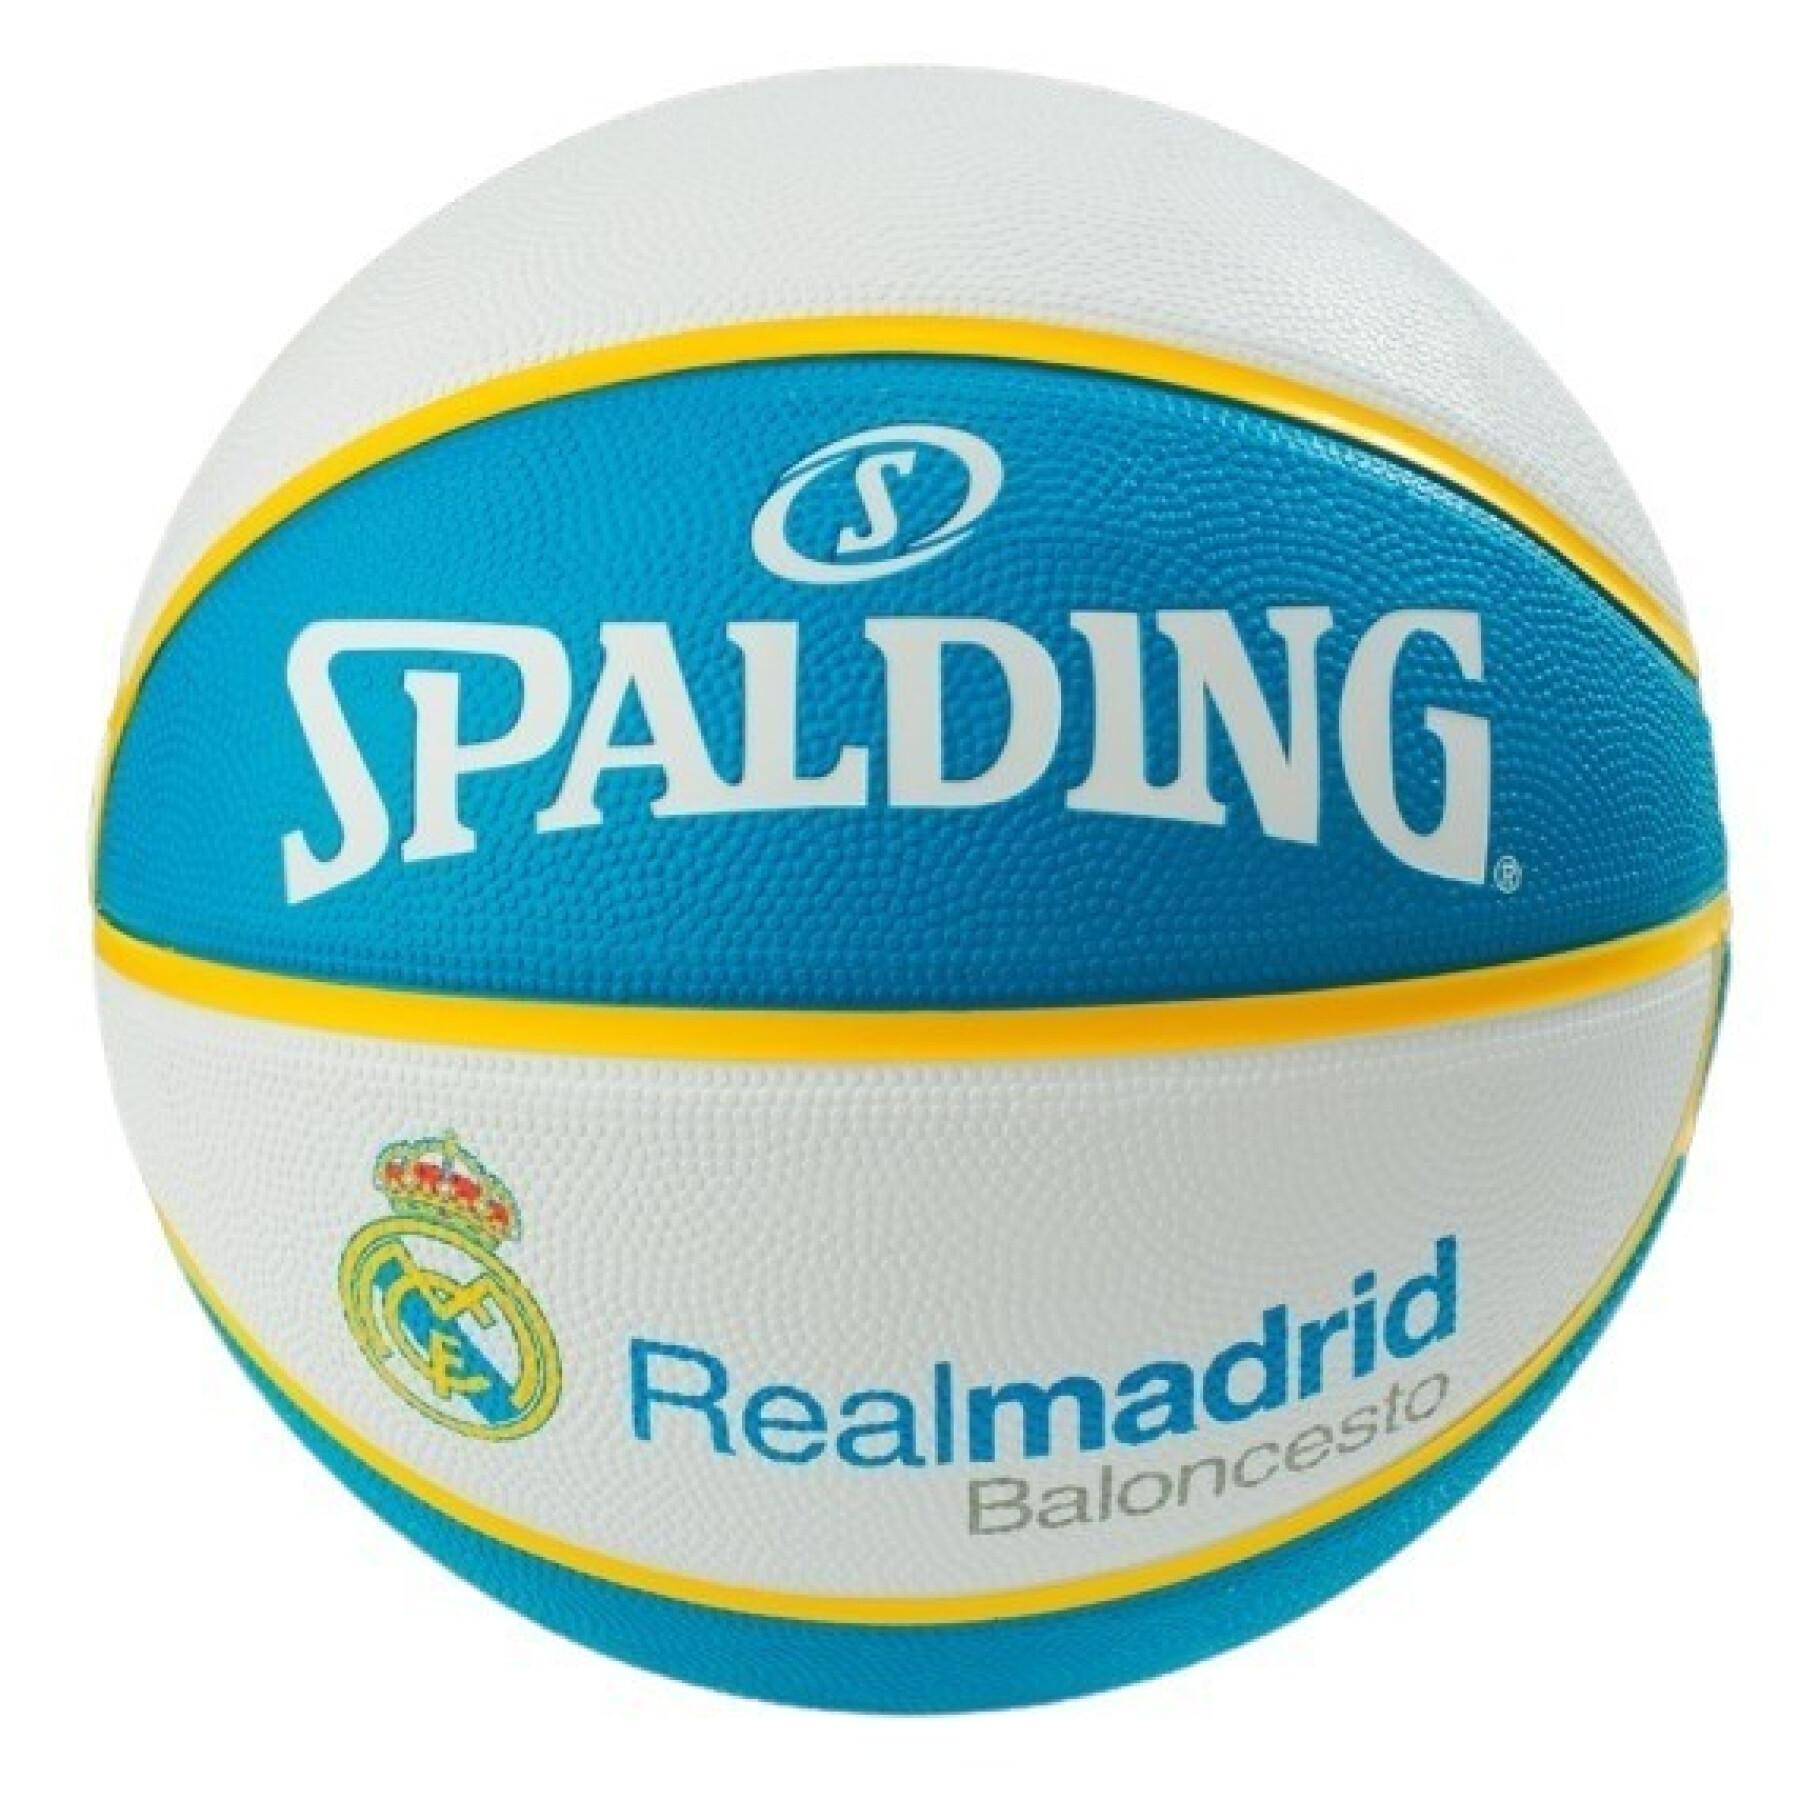 Rubberen bal Real Madrid Euroleague Series El Team